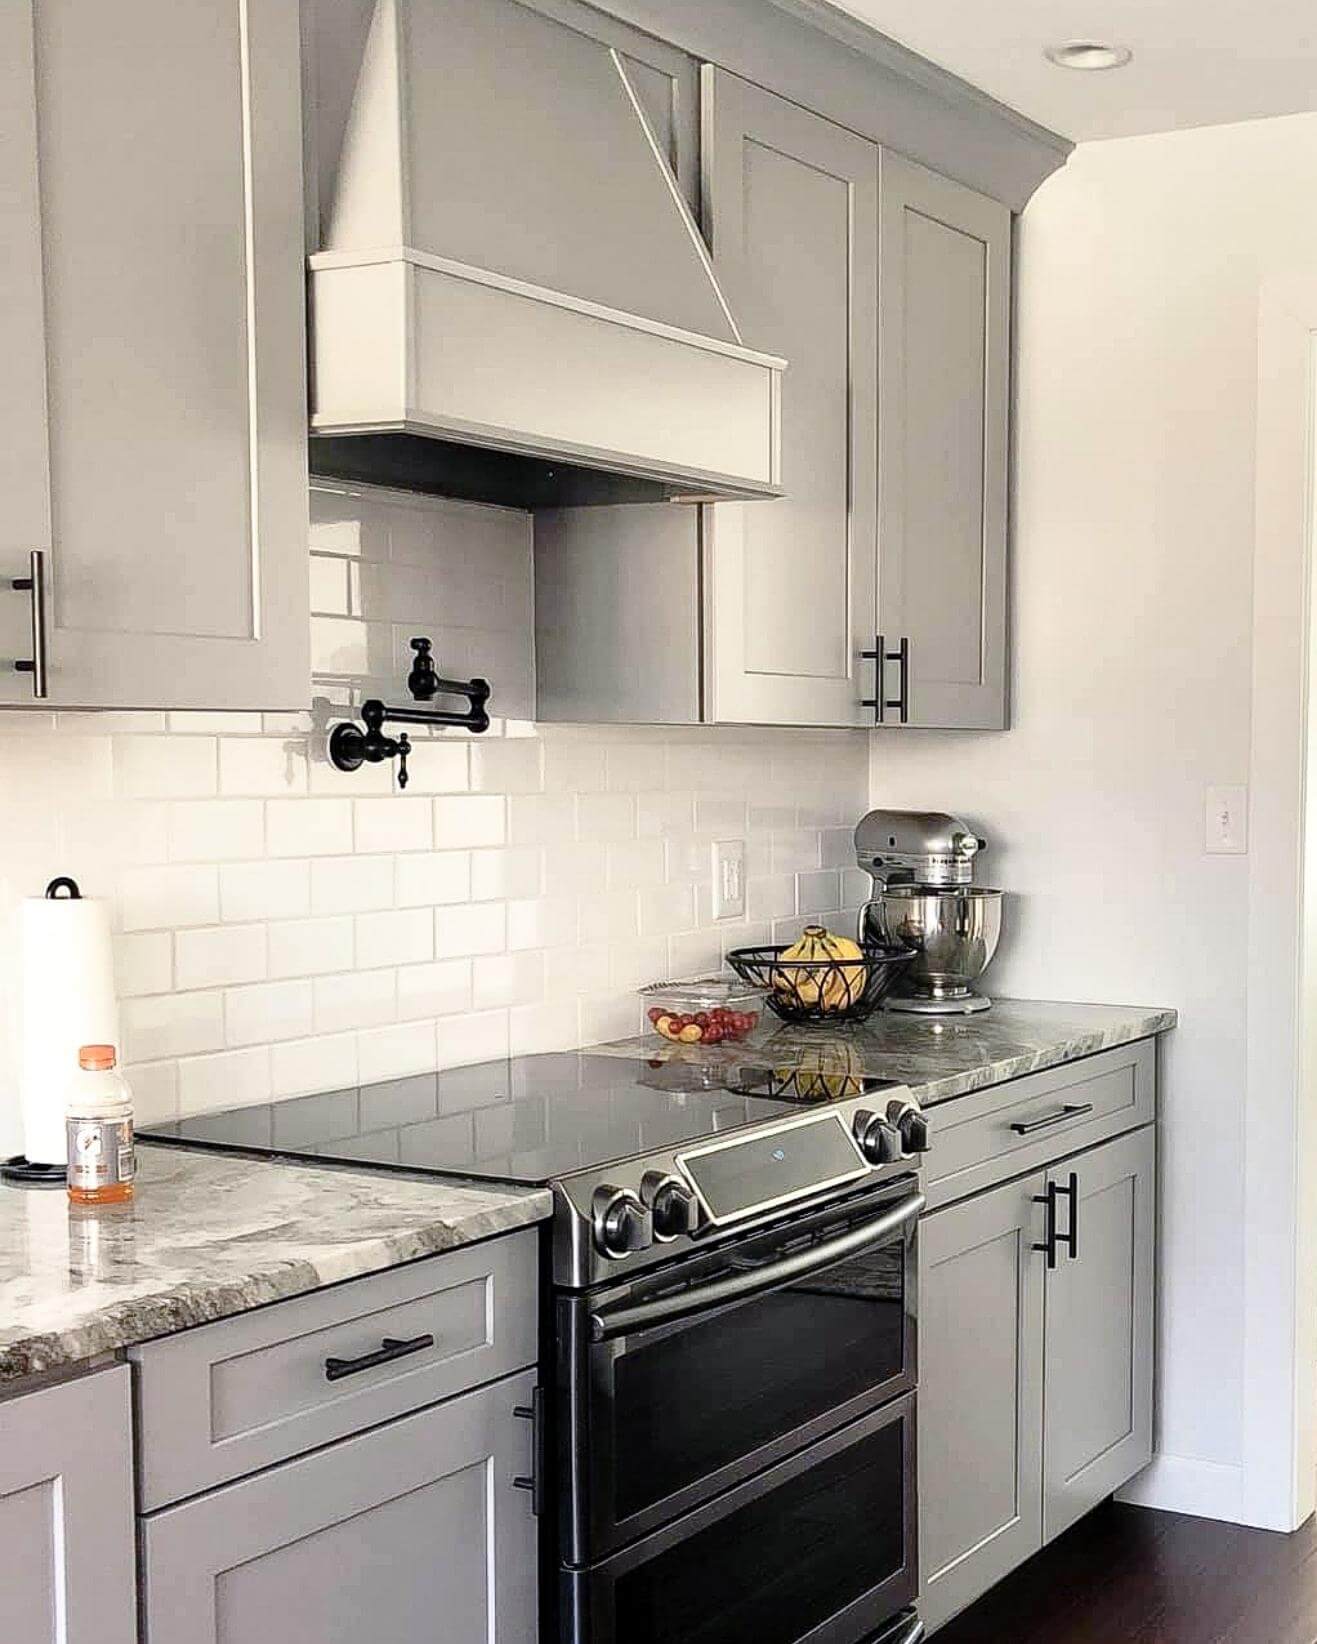 Geist residence remodel kitchen